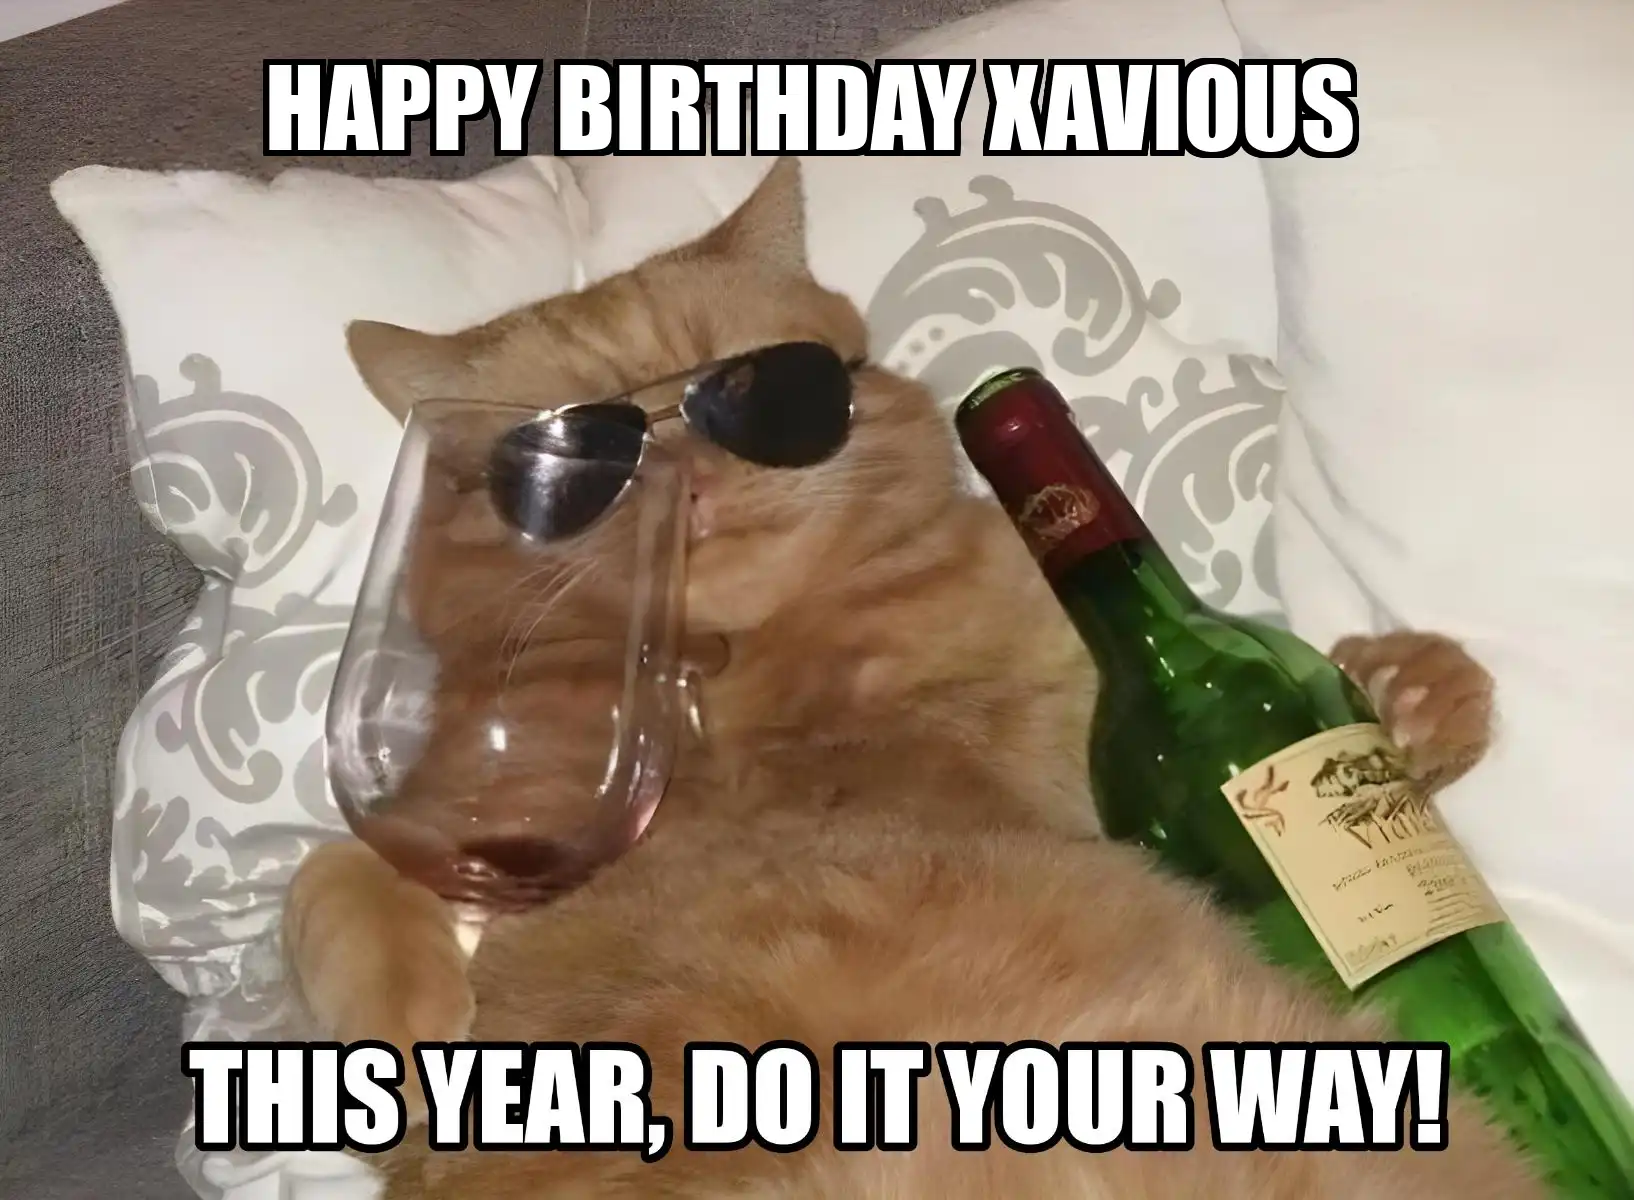 Happy Birthday Xavious This Year Do It Your Way Meme